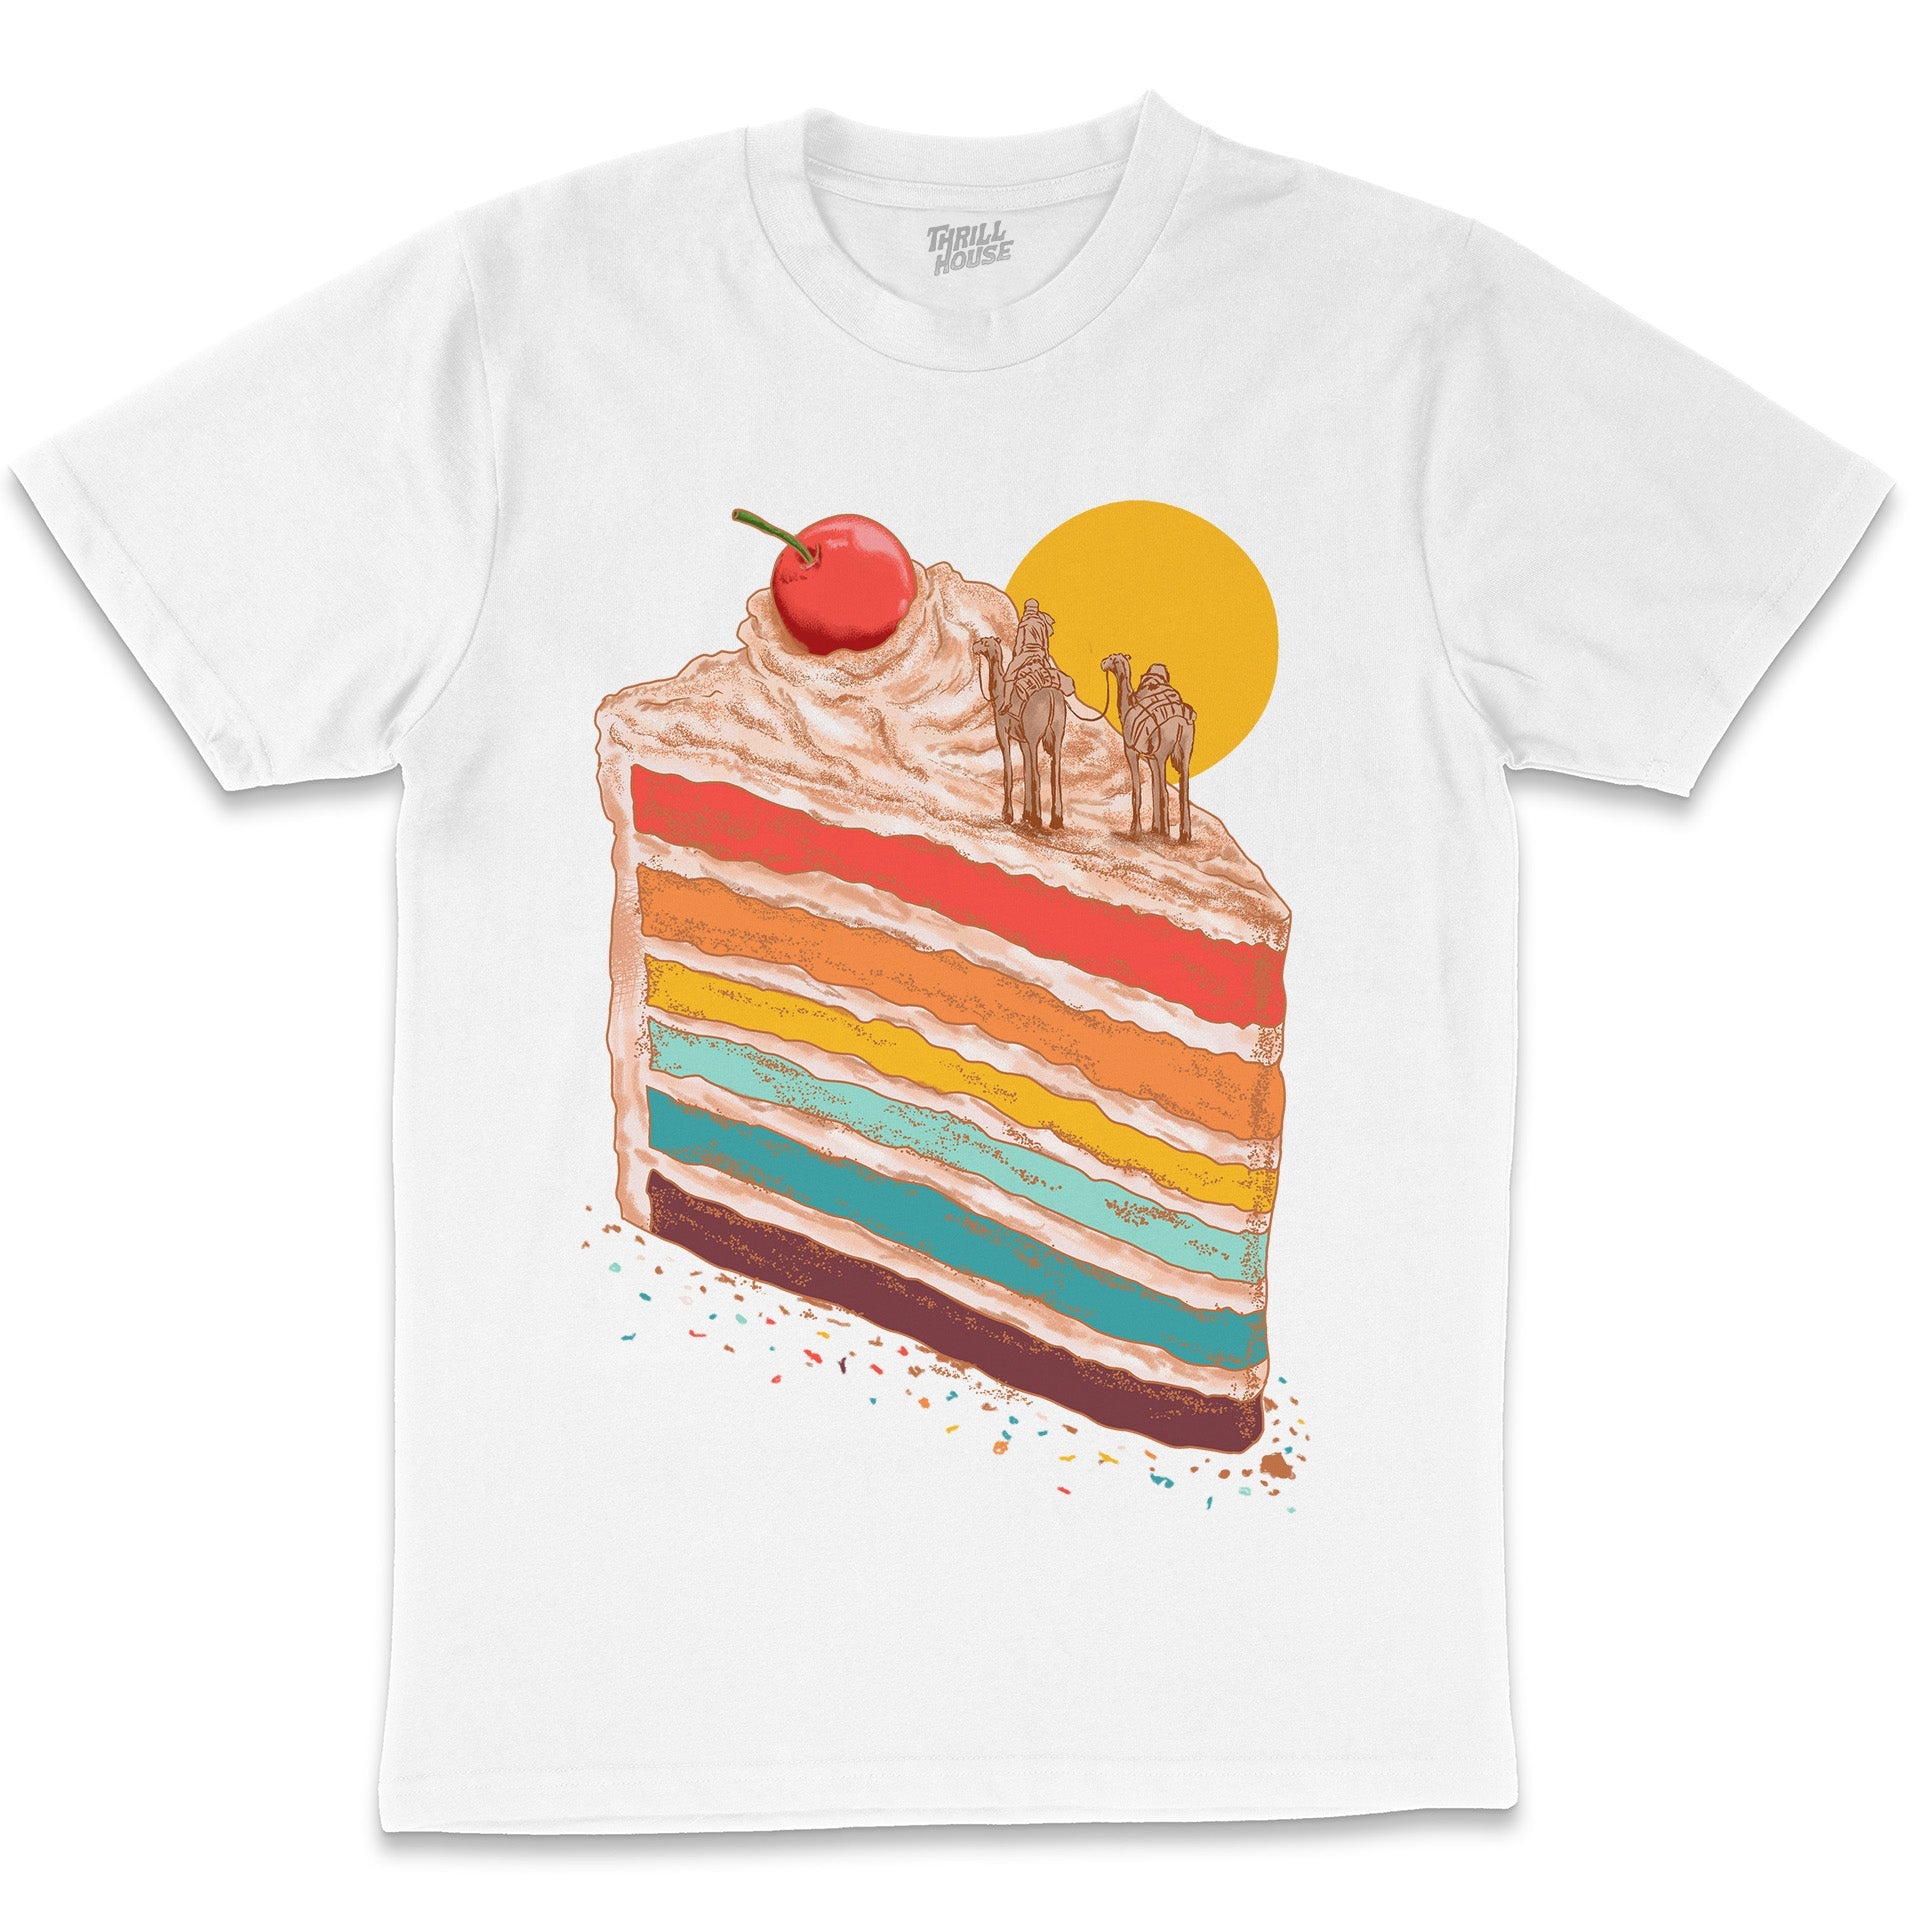 Dessert Desert Artsy Foodie Cake Sunset Nature Design Pun Cotton T-Shirt